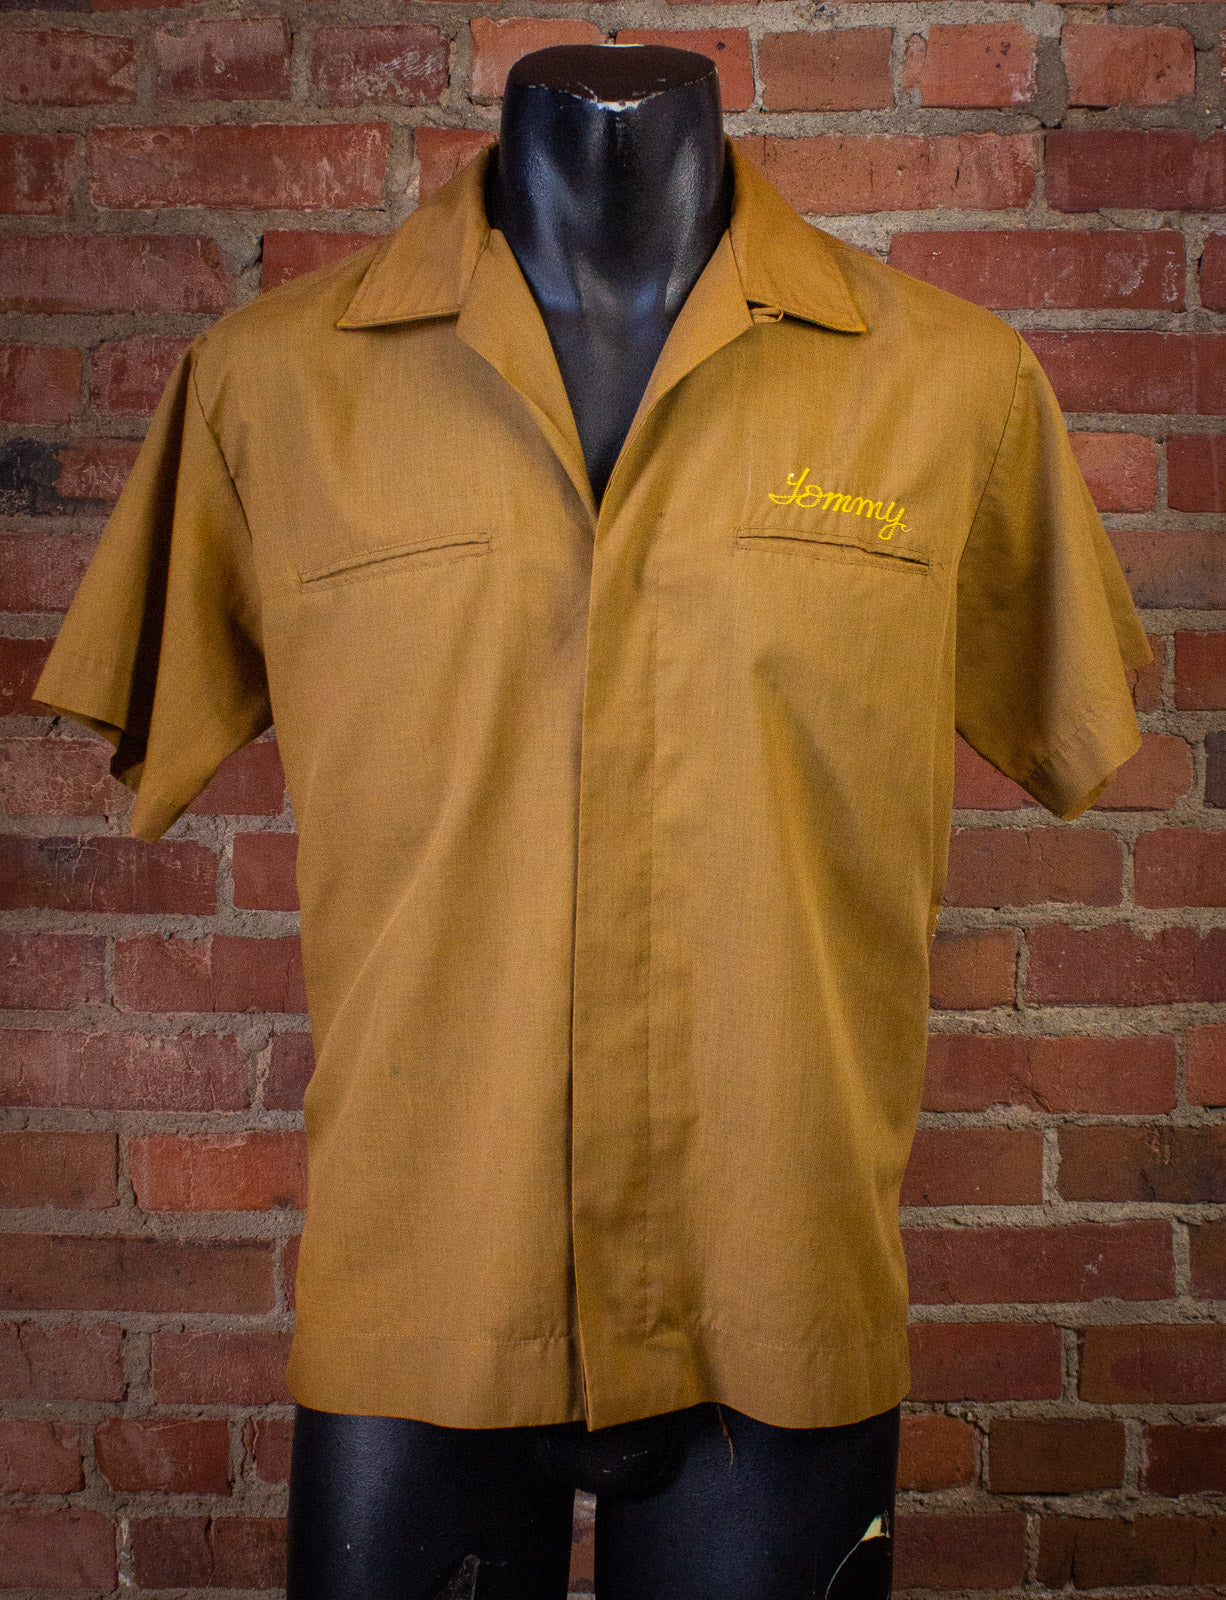 Vintage Imperial Scottsburg Lanes Tommy Bowling Shirt 60s Brown Medium